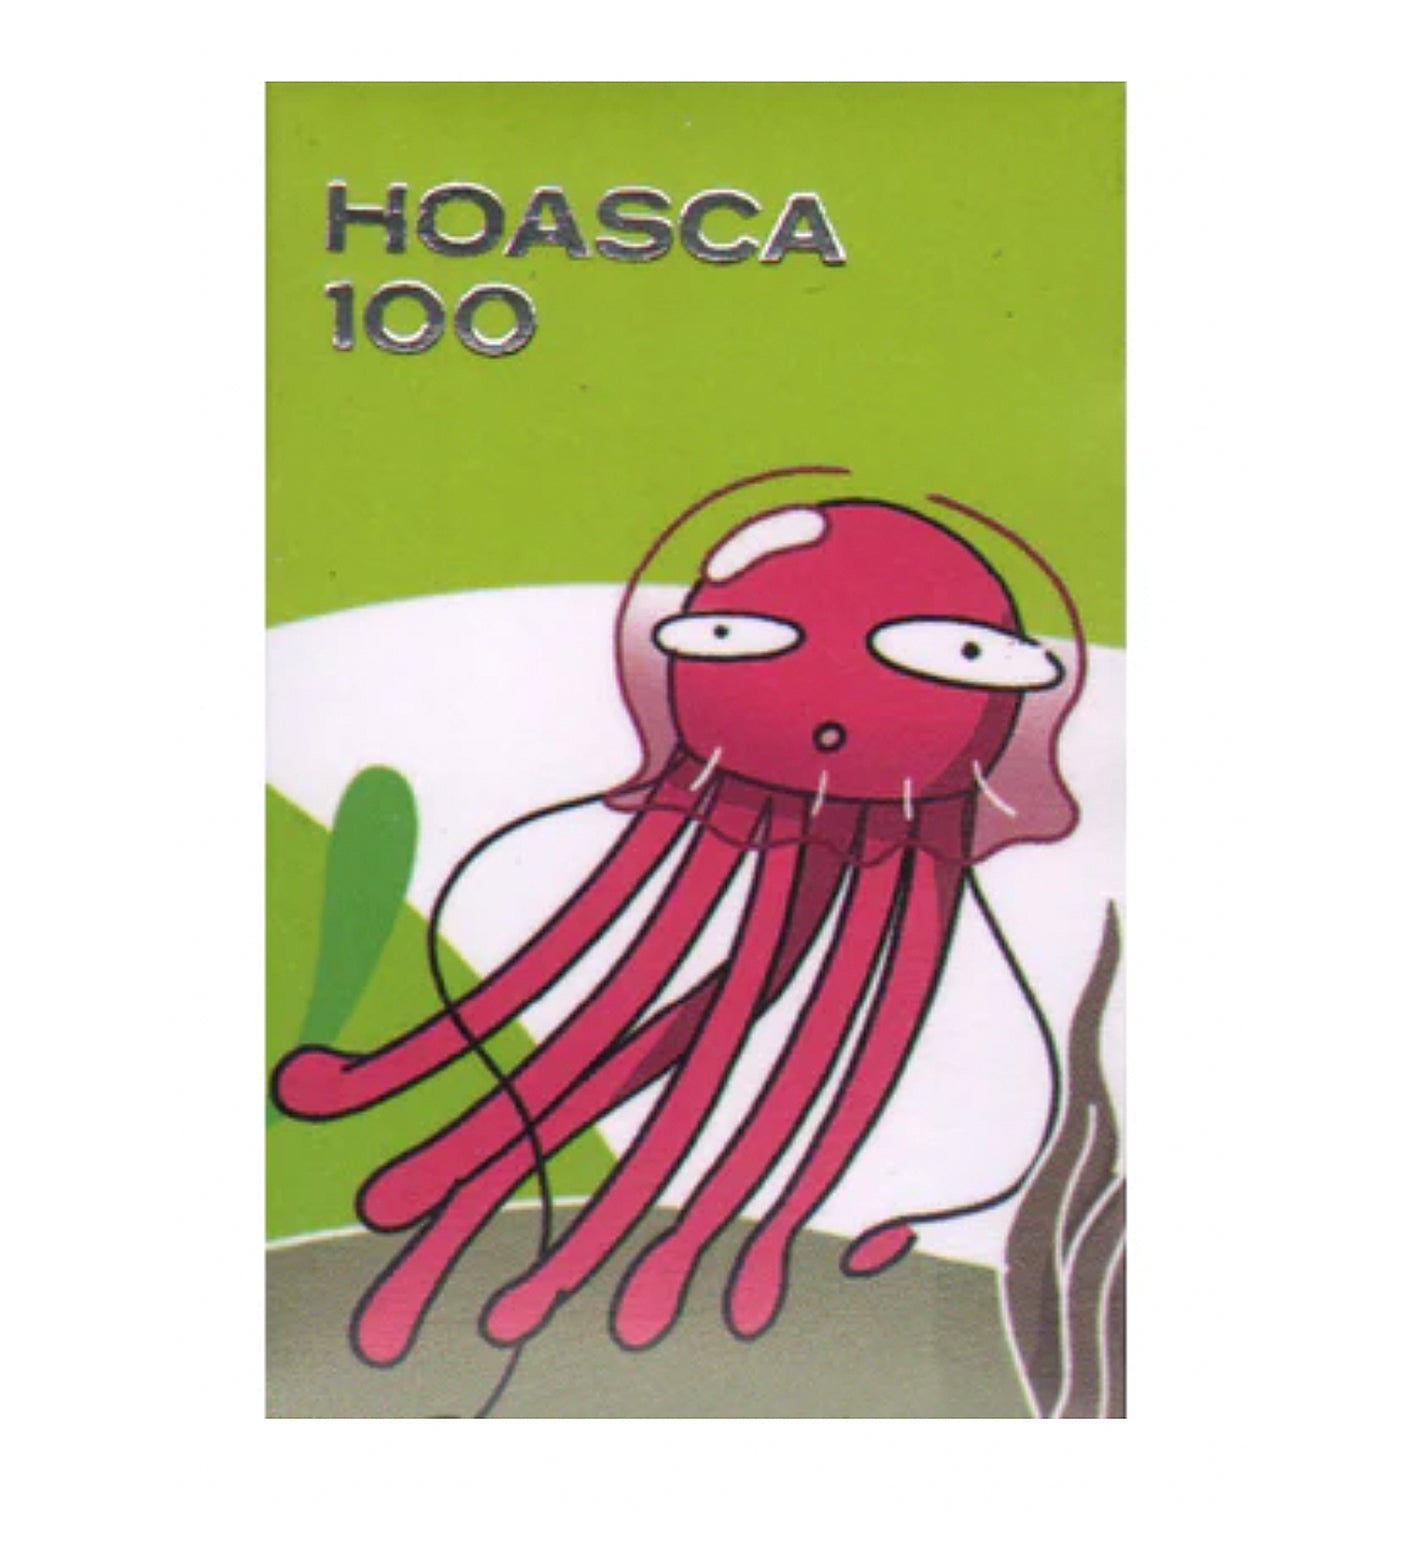 Hoasca 100 35mm Film 36 Exposures (£17.00 incl VAT)